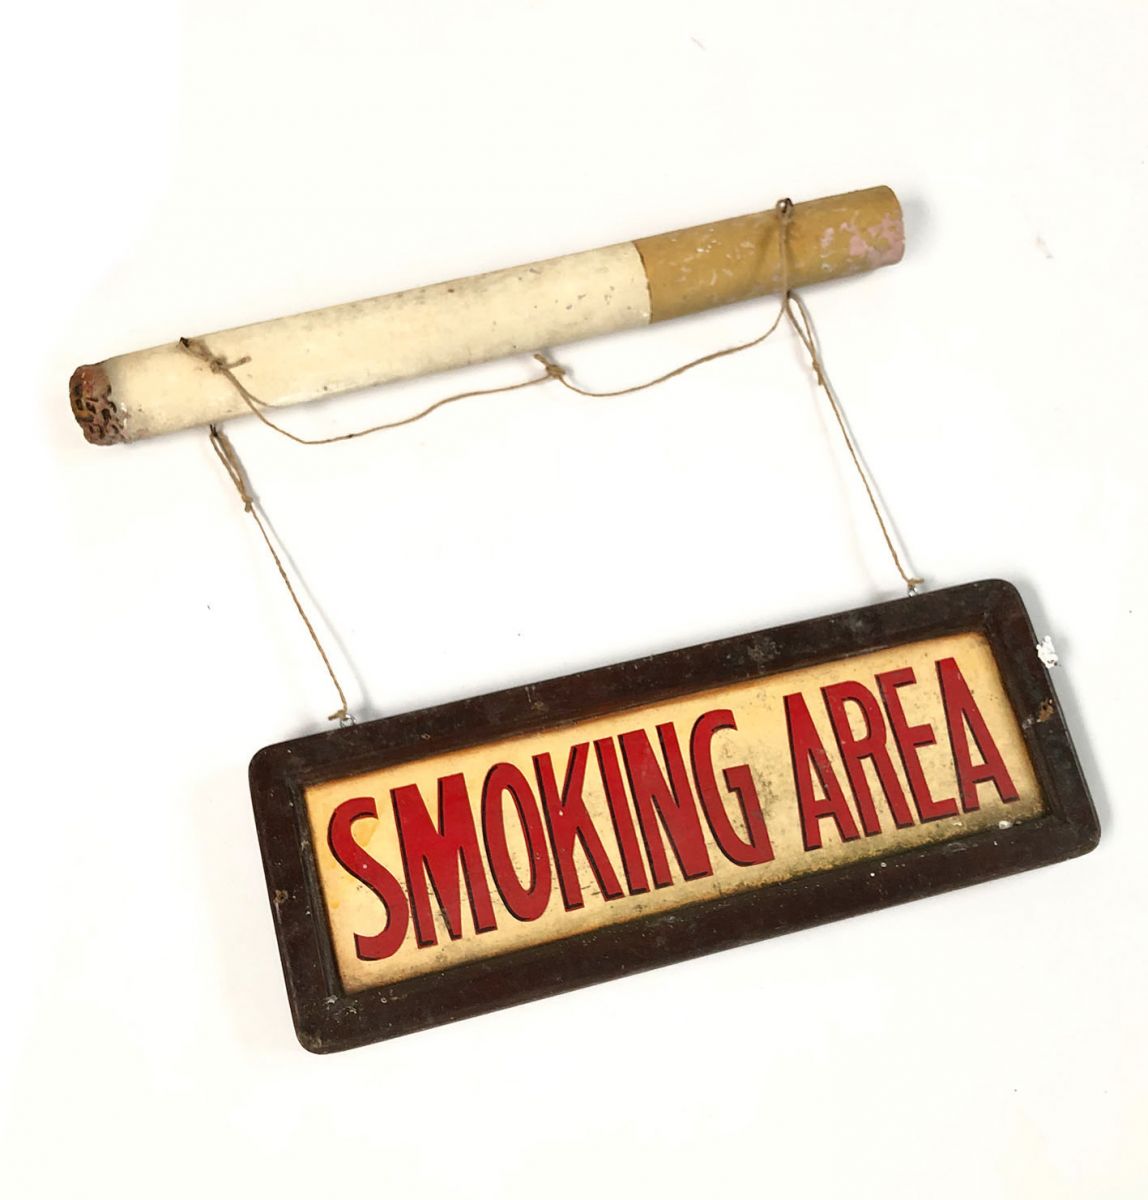 2 two-sided signboards - No Smoking, Smoking Area